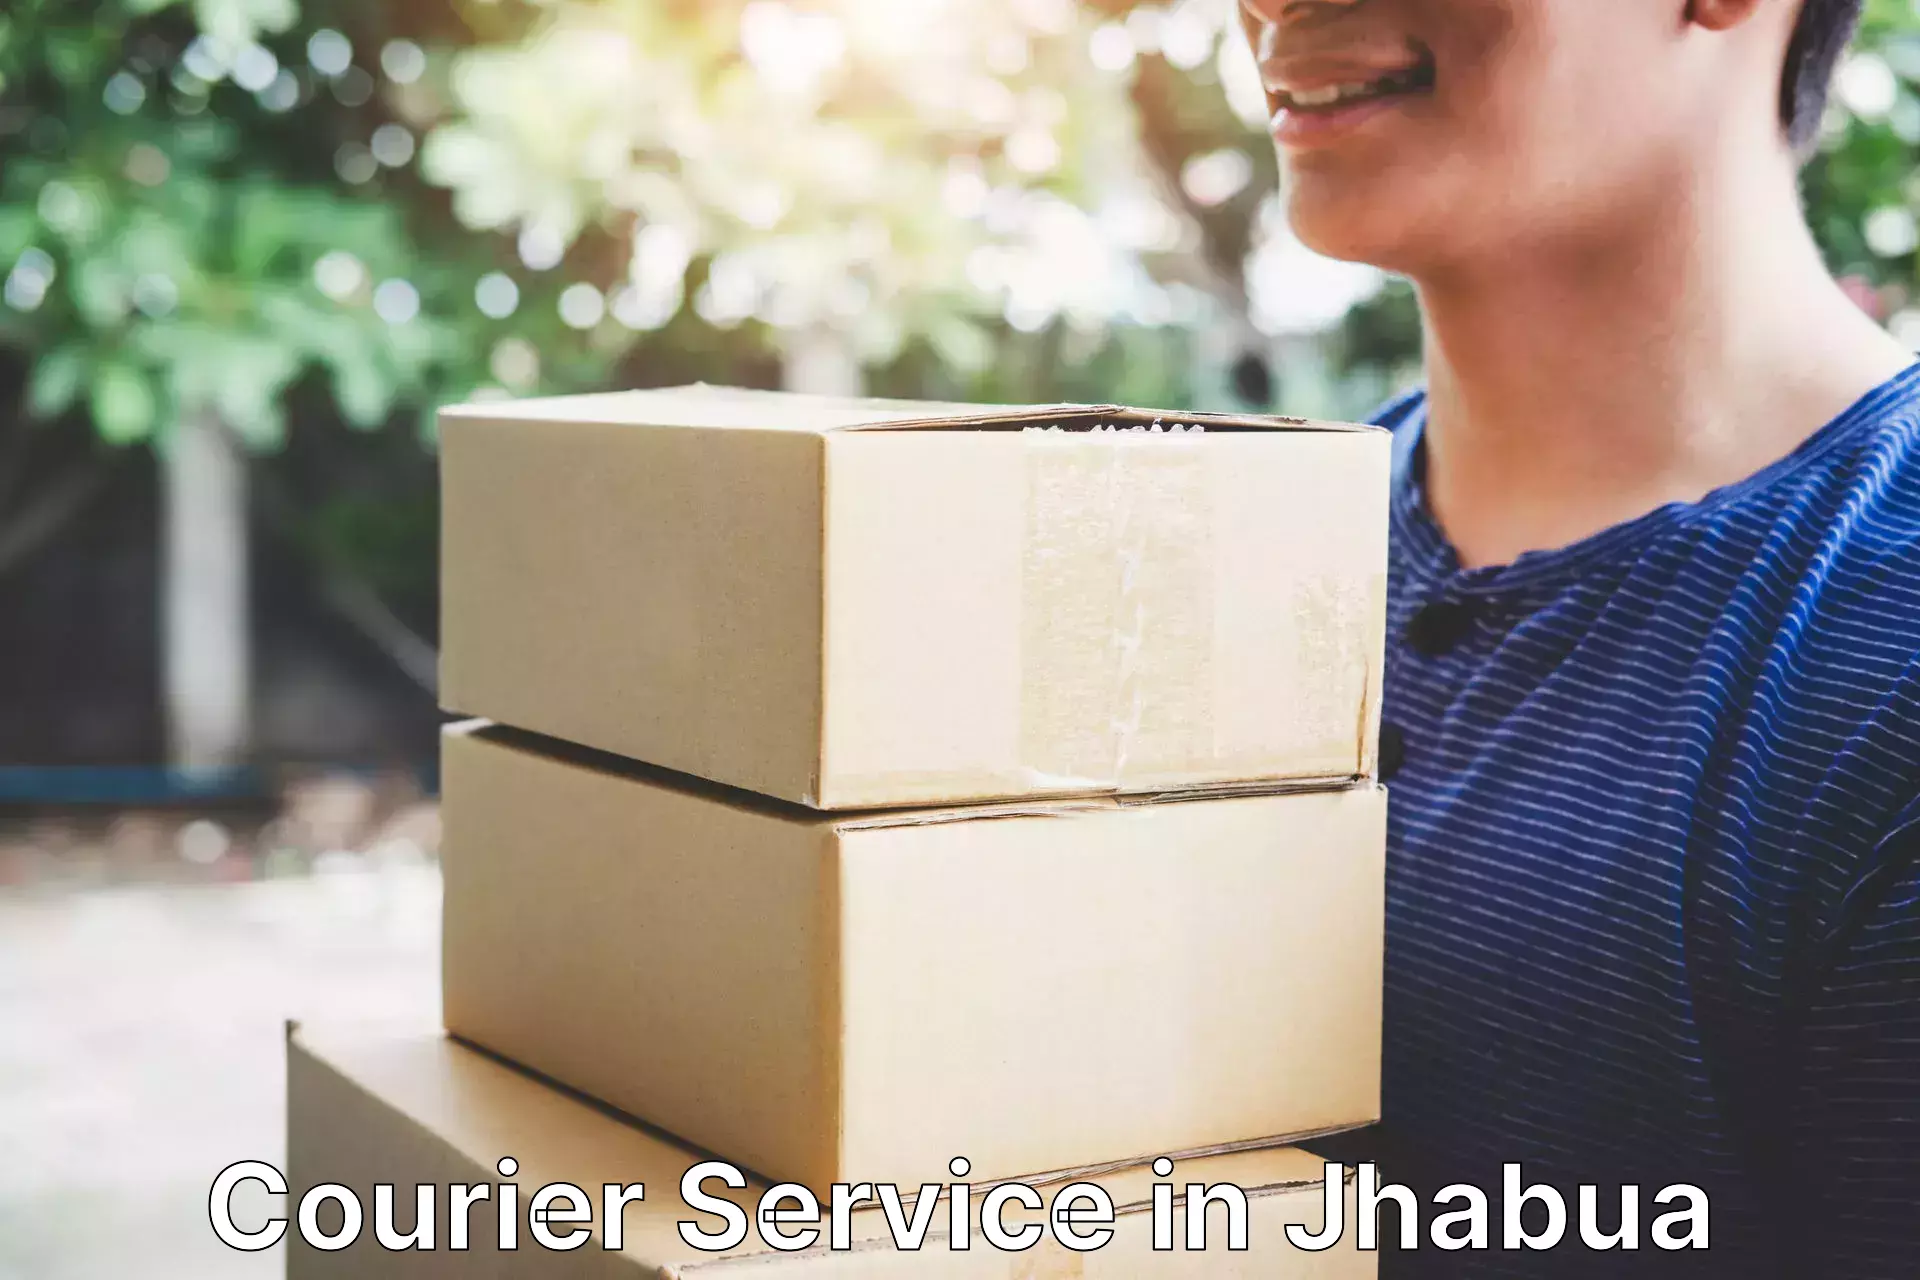 Parcel service for businesses in Jhabua